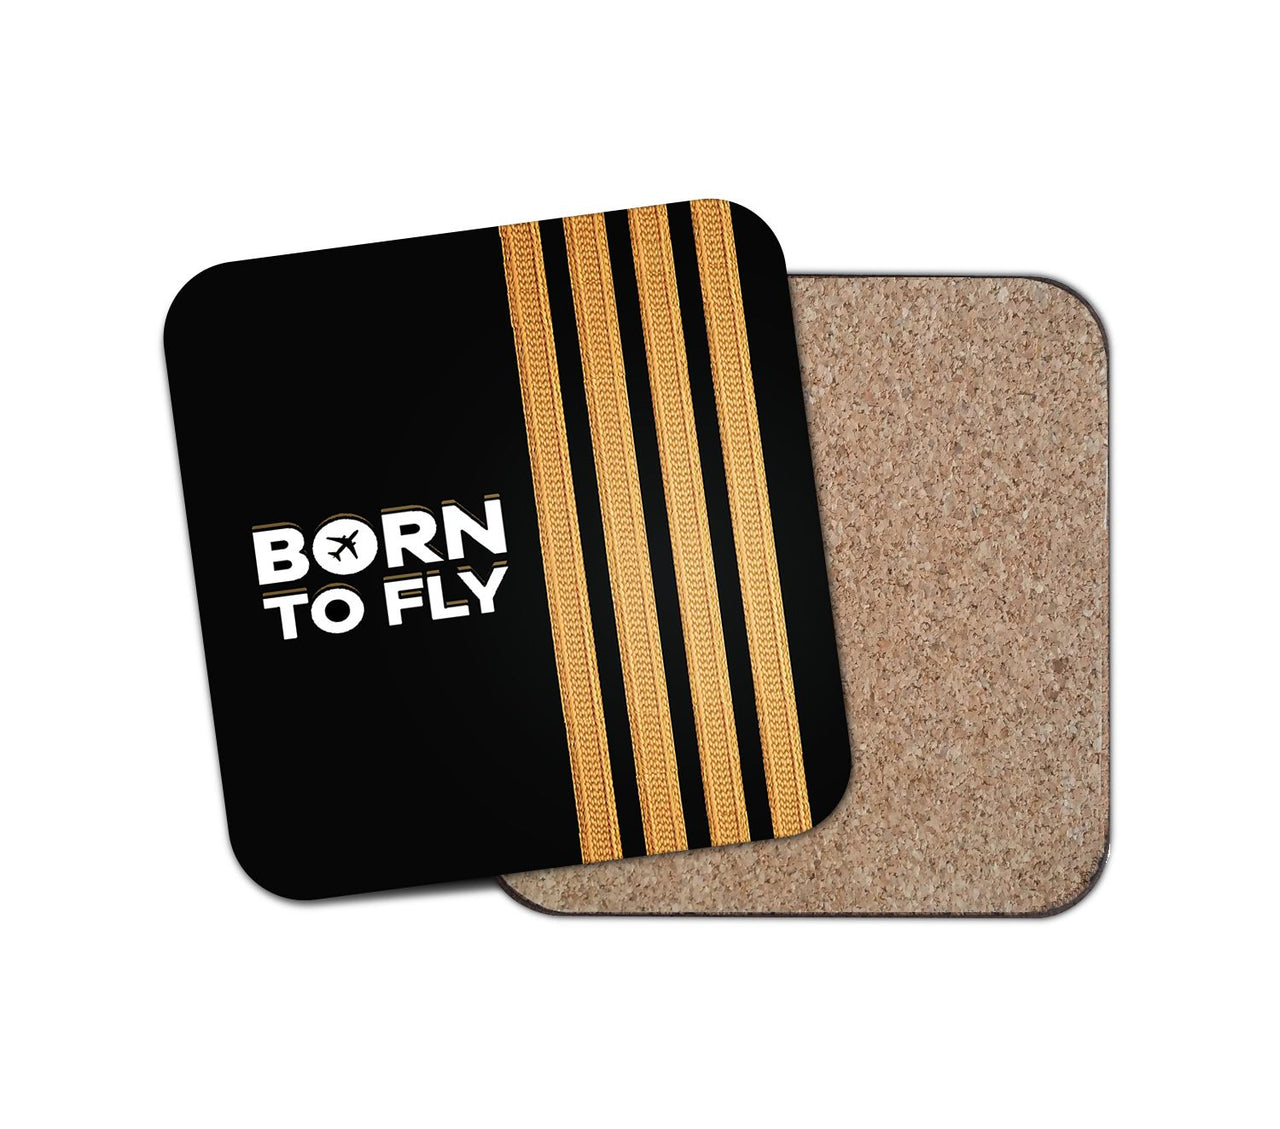 Born To Fly & Pilot Epaulettes (4 Lines) Designed Coasters